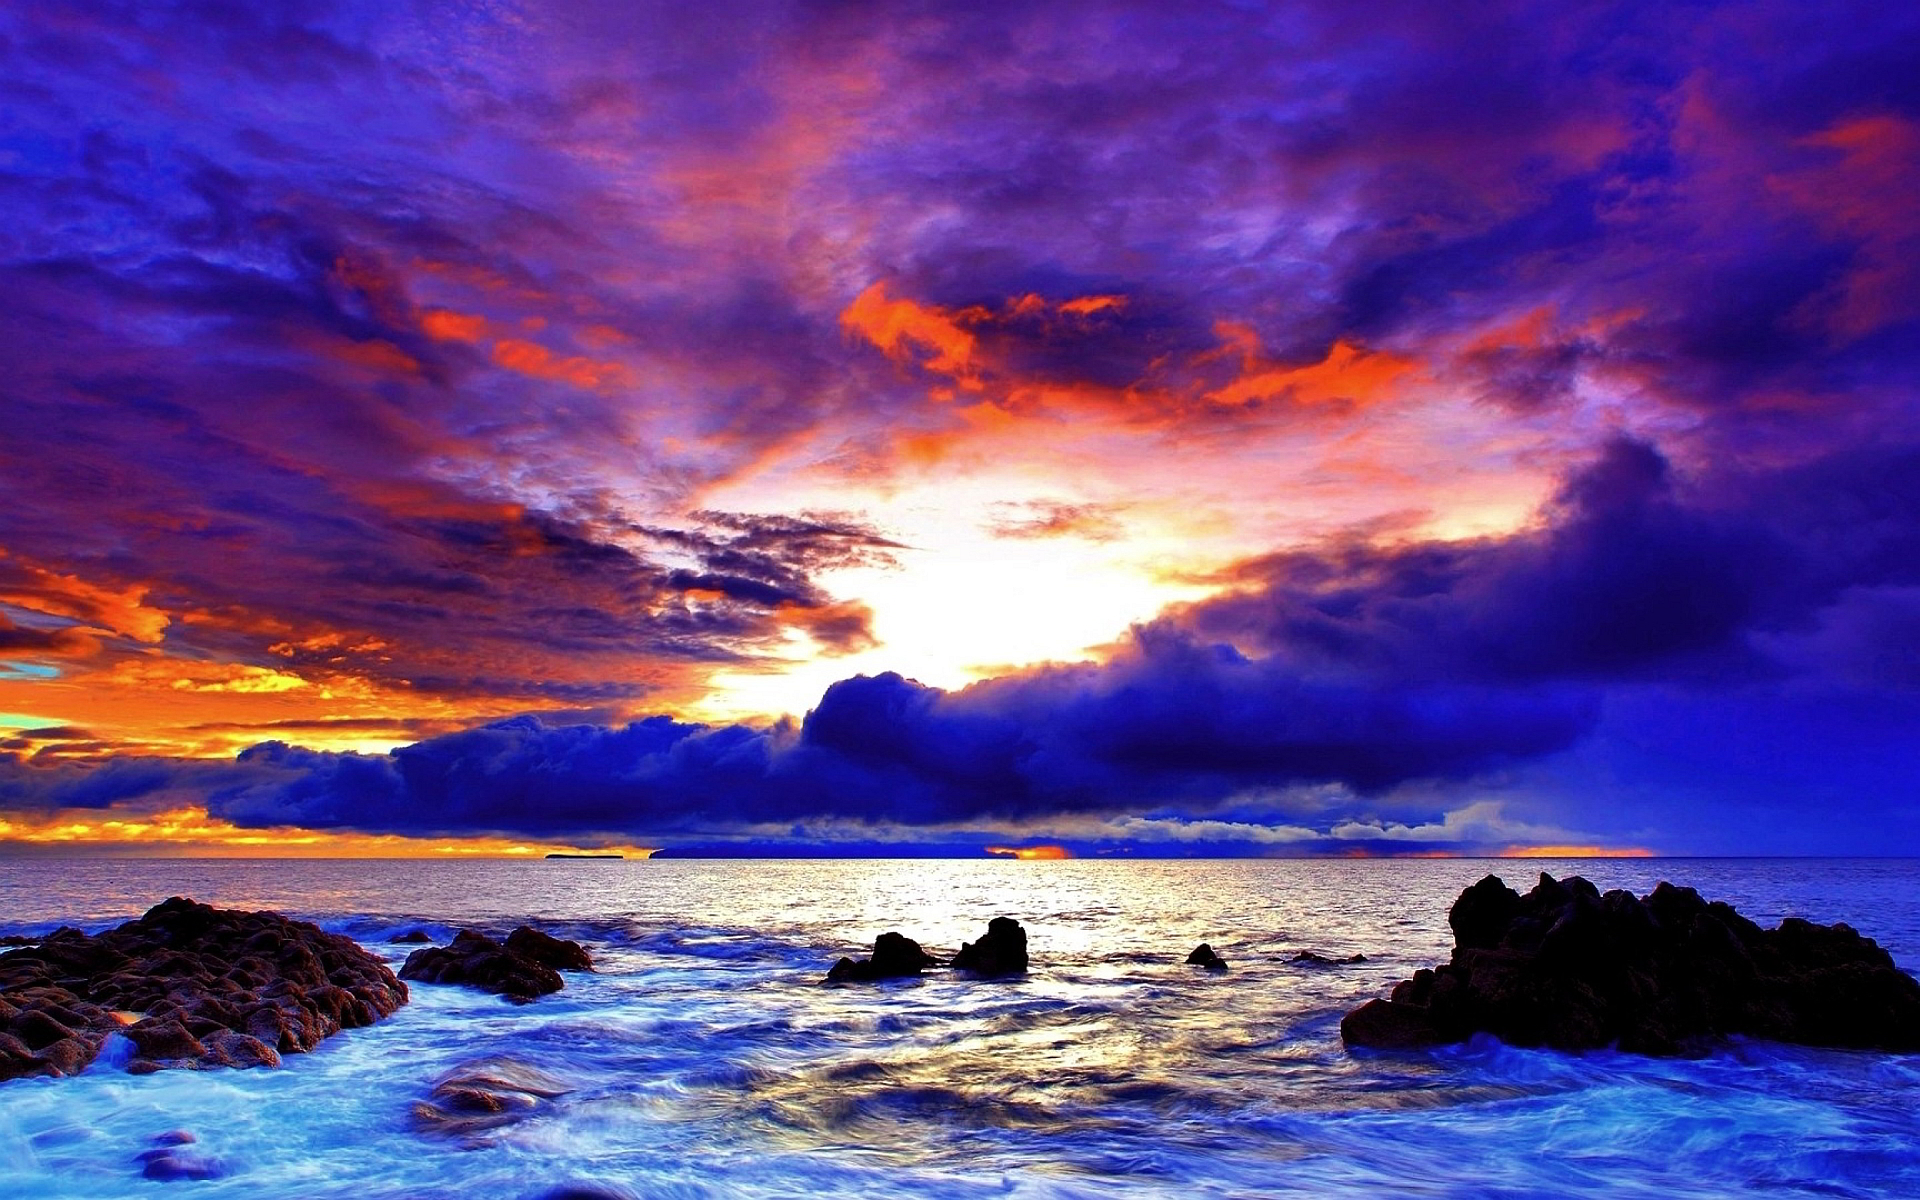 sunset images purple beach - HD Desktop Wallpapers | 4k HD